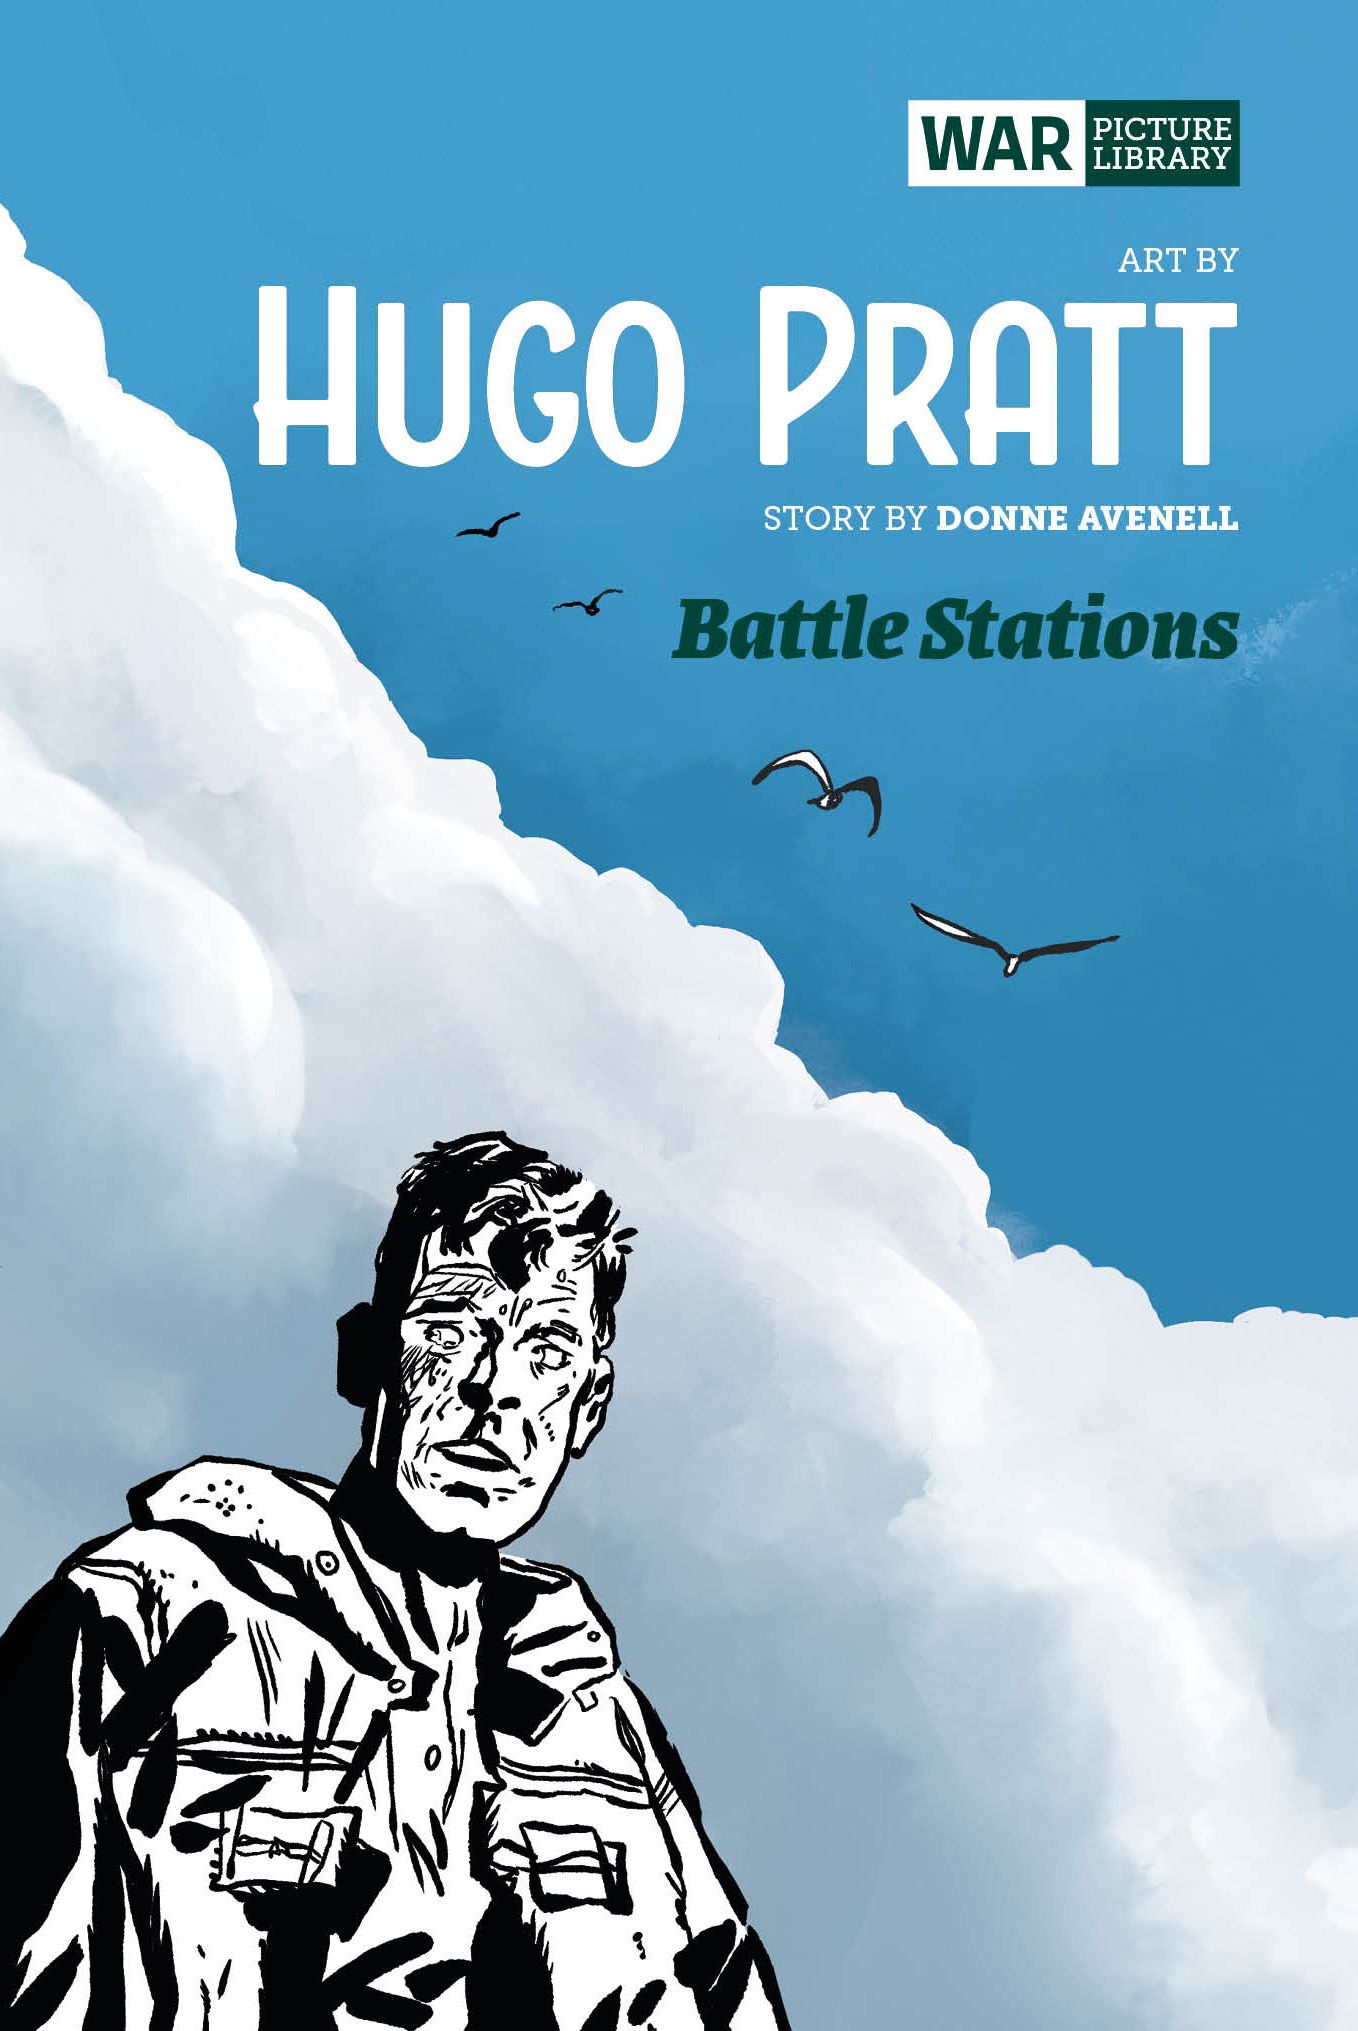 Coming in 2020: Hugo Pratt’s War Picture Library